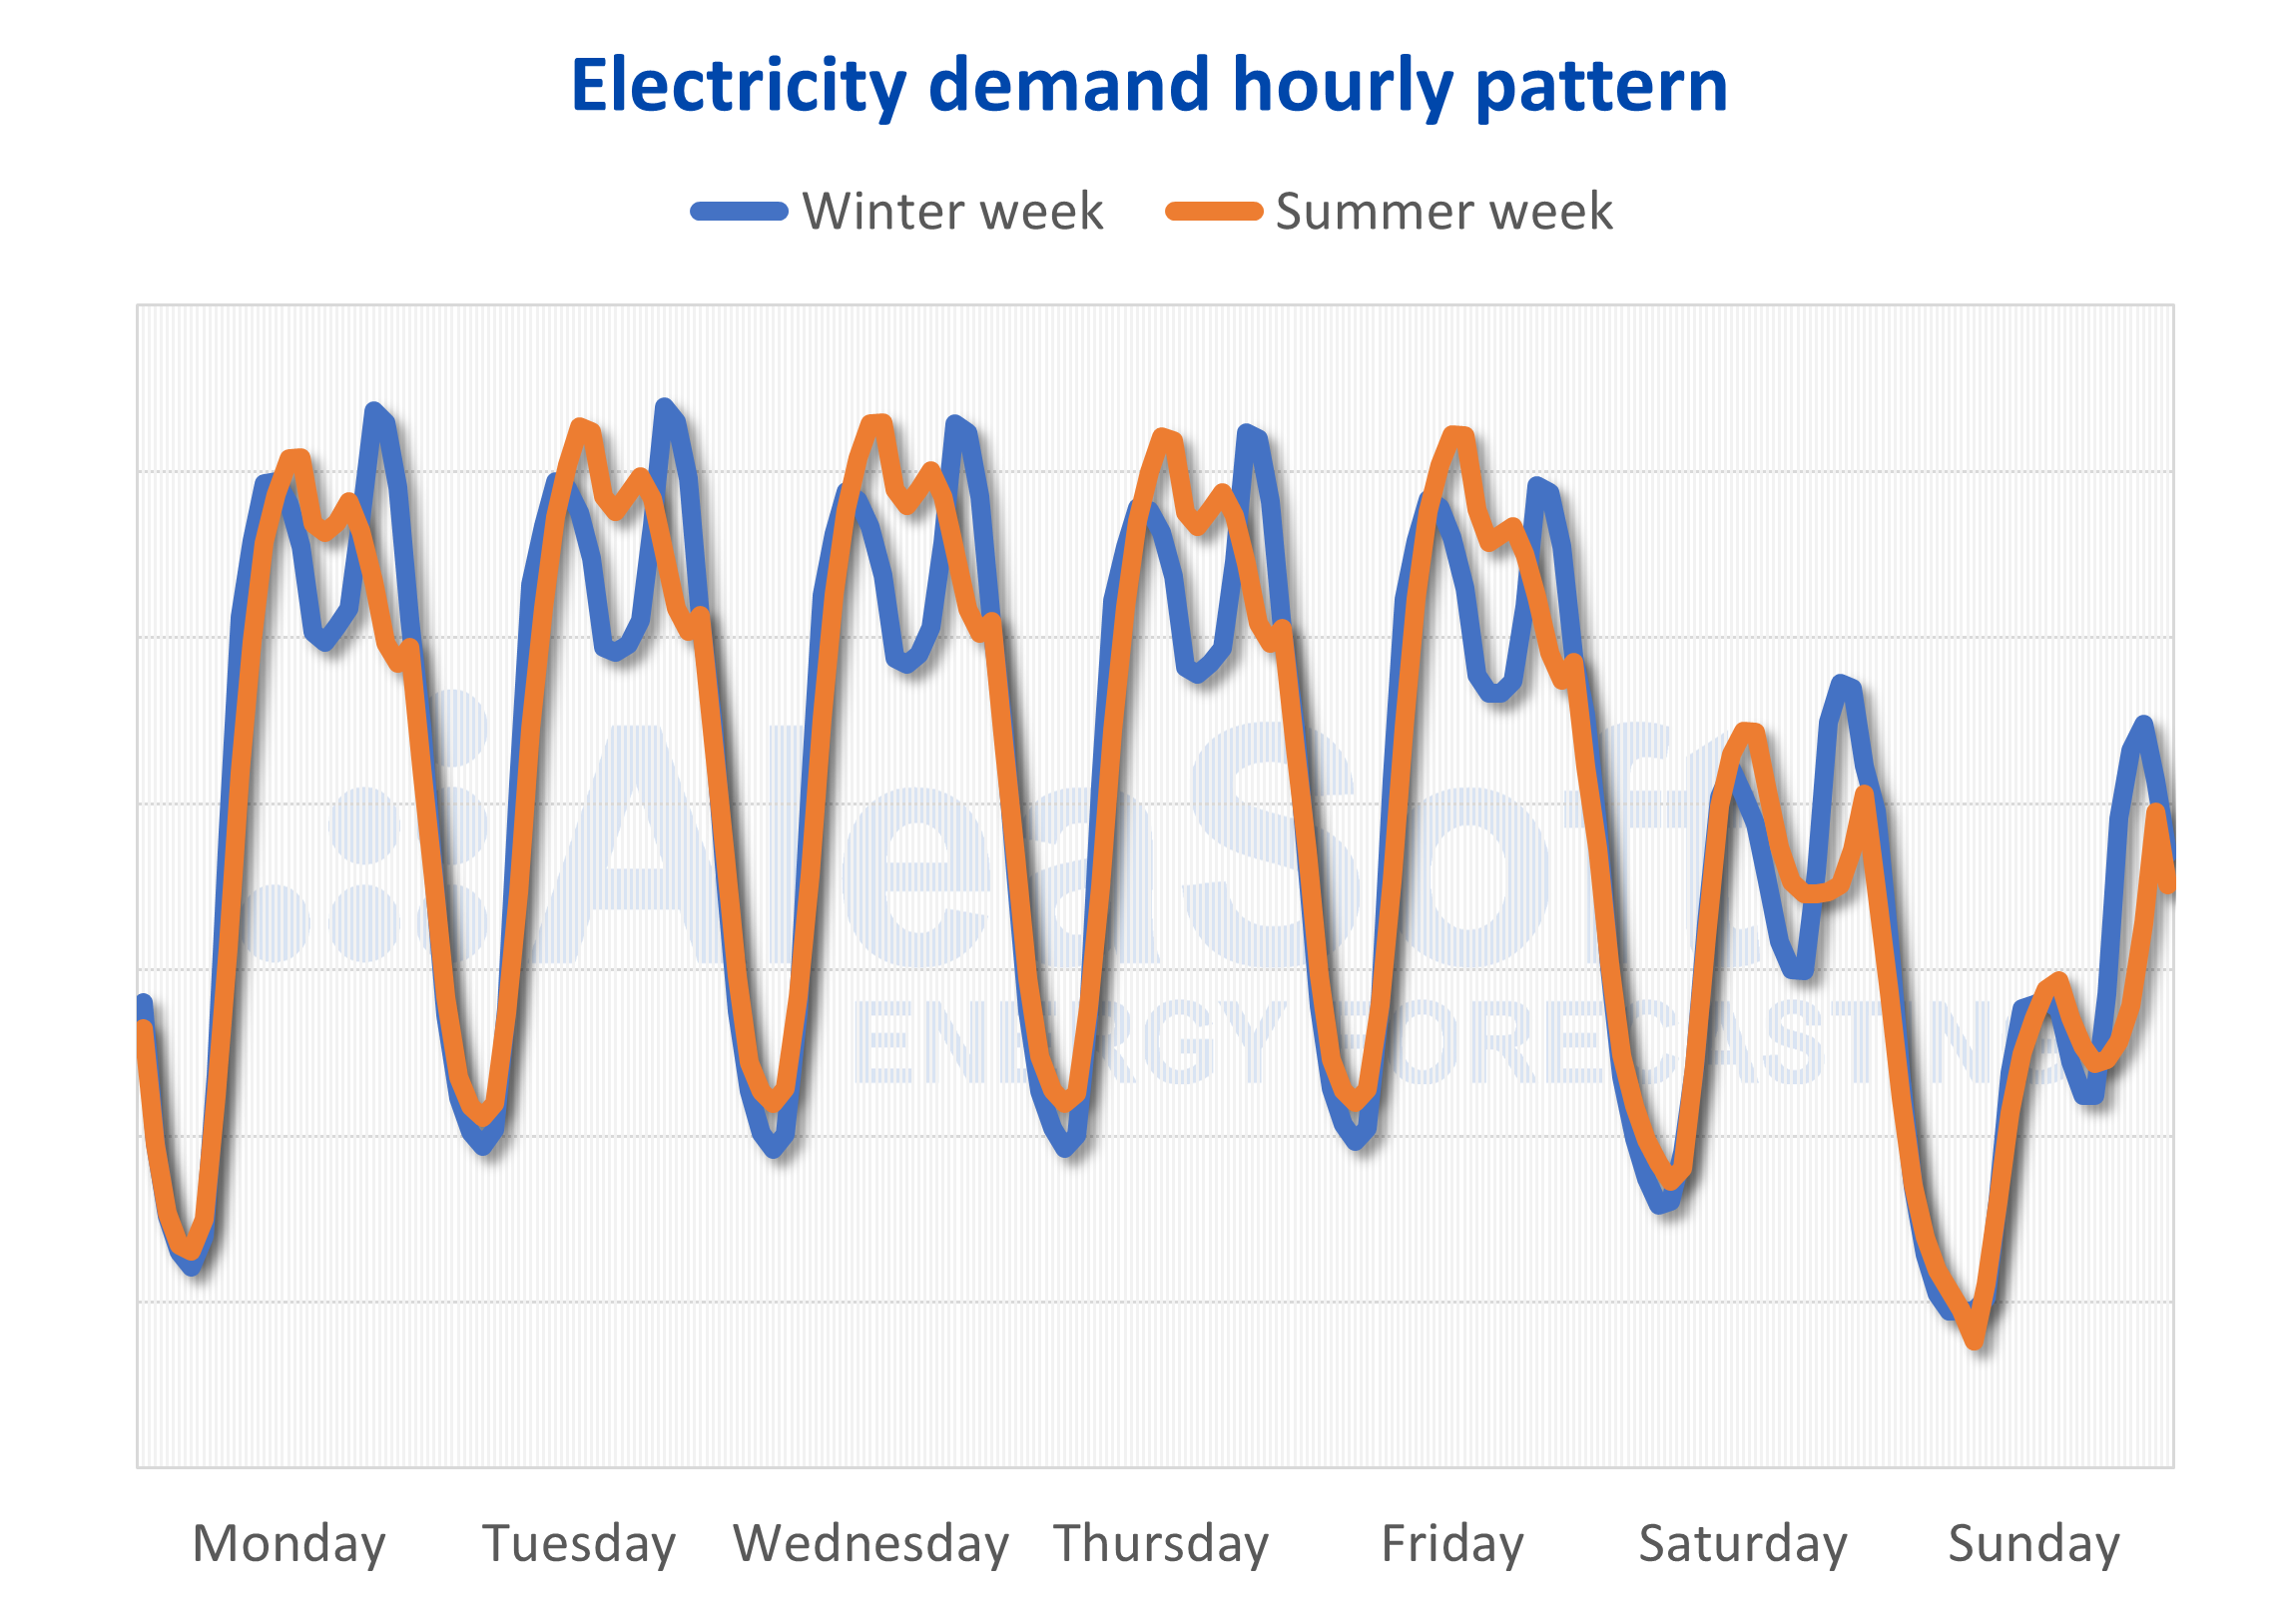 AleaSoft - Electricity demand pattern Spain